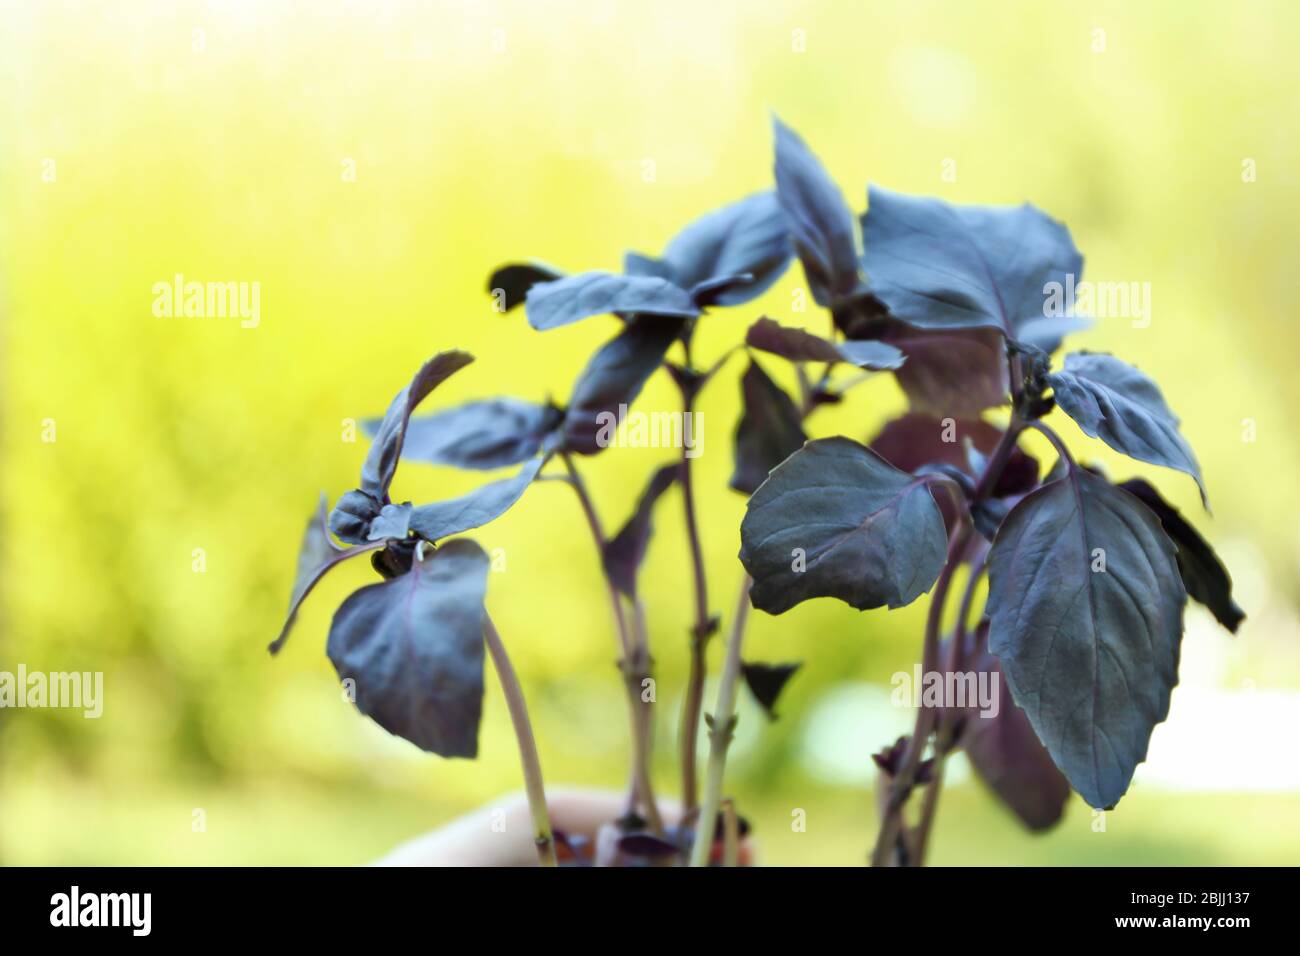 Rote Basilikumpflanze auf unscharfer Hintergrund Stockfoto